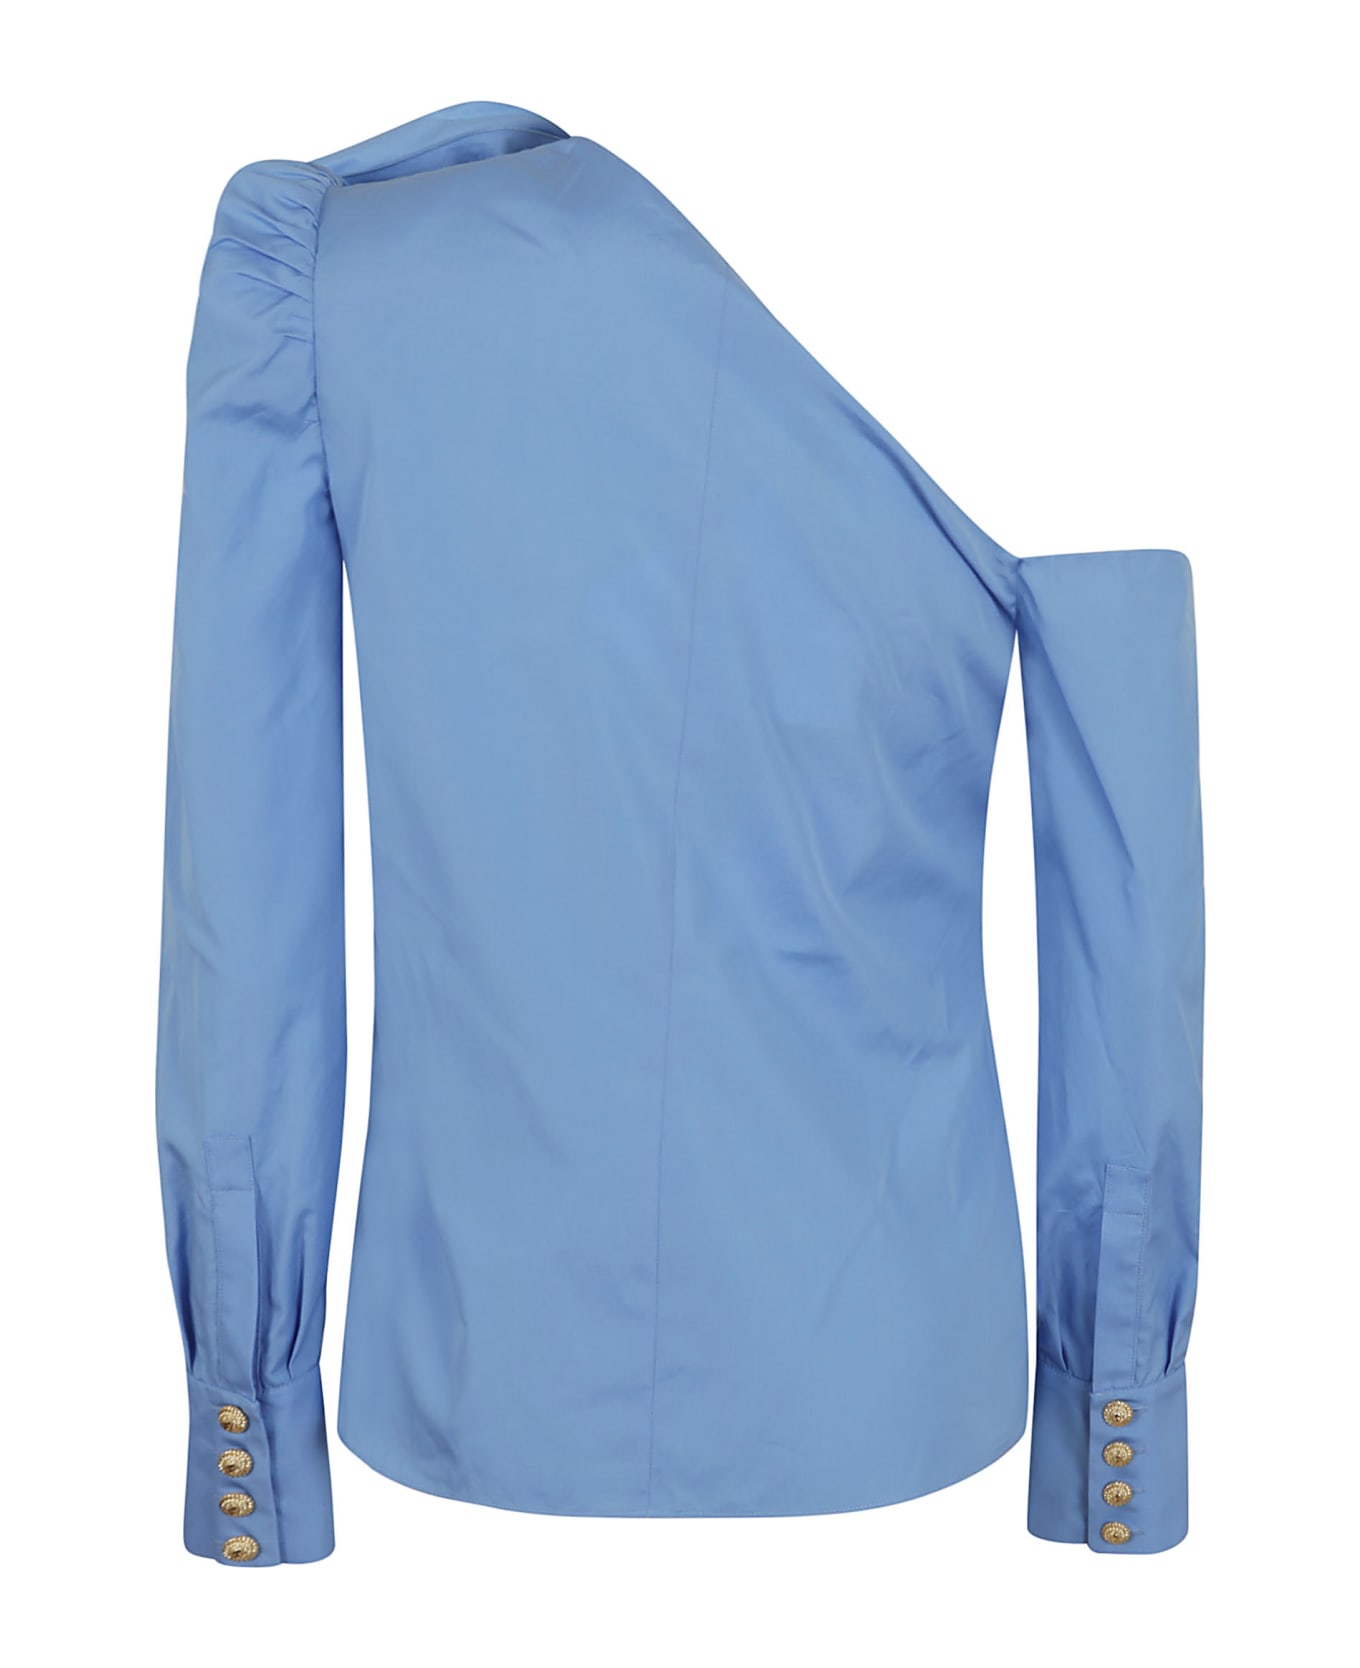 Balmain Large Rose Popeline Shirt - Dm Bleu Ciel